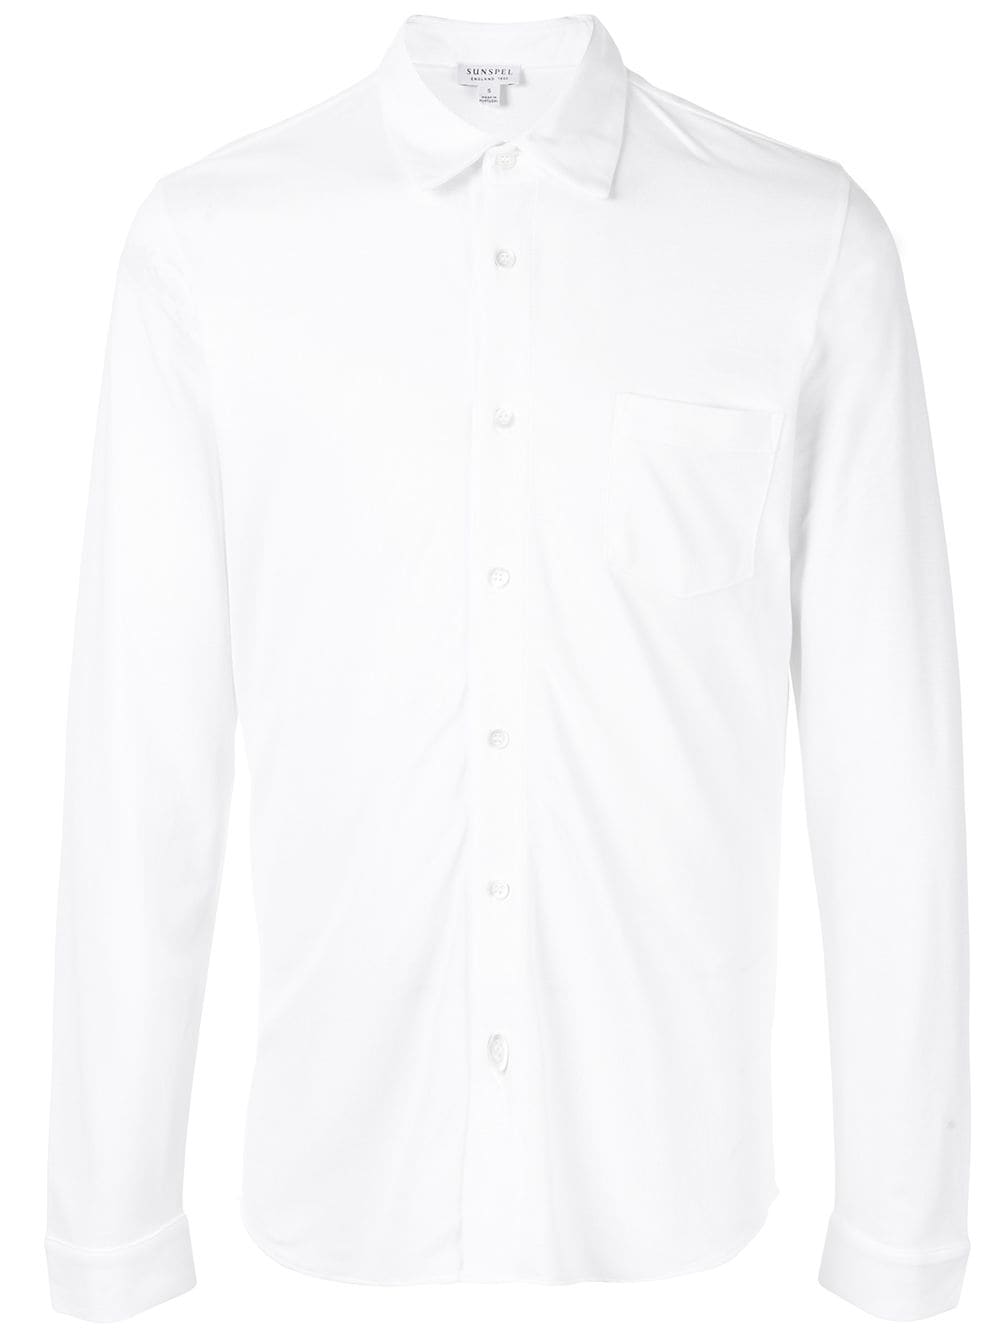 Sunspel pique relaxed shirt - White von Sunspel